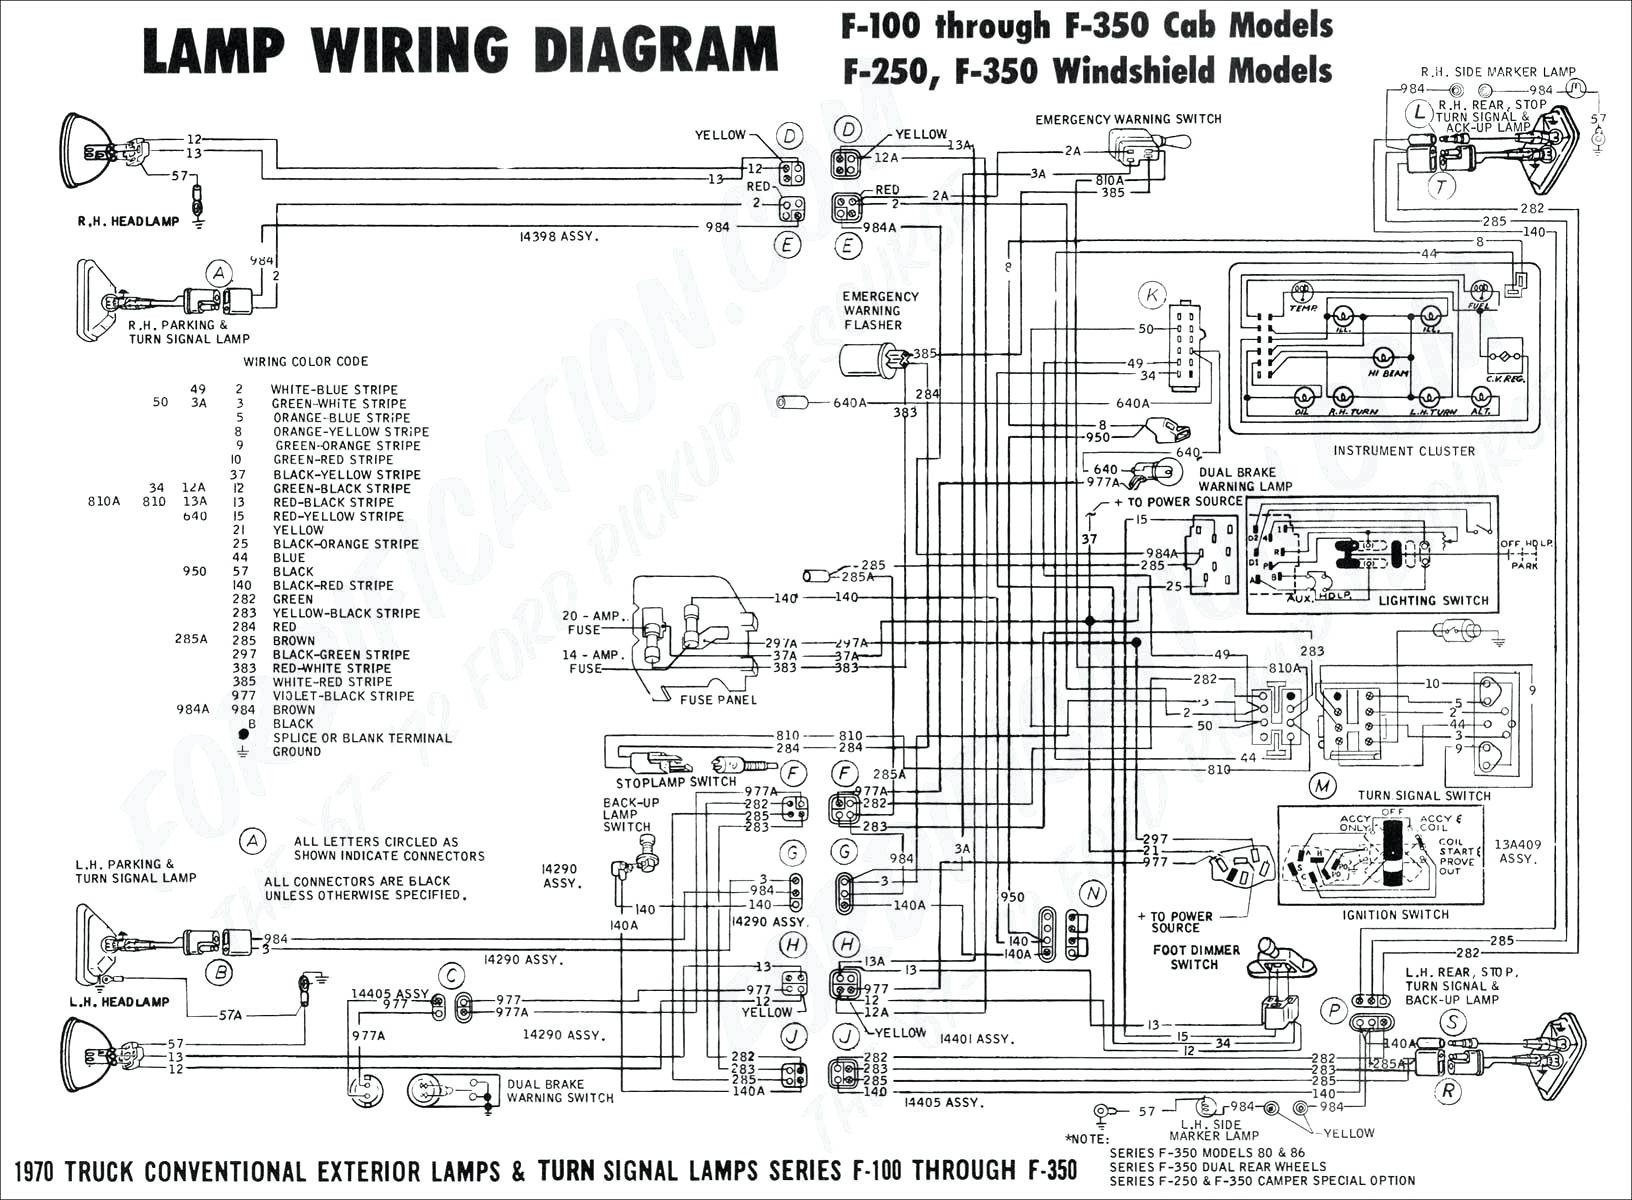 1988 Chevy Truck Radio Wiring Diagram 1990 Chevy Silverado Stereo Wiring Diagram Wiring Diagram Used Of 1988 Chevy Truck Radio Wiring Diagram